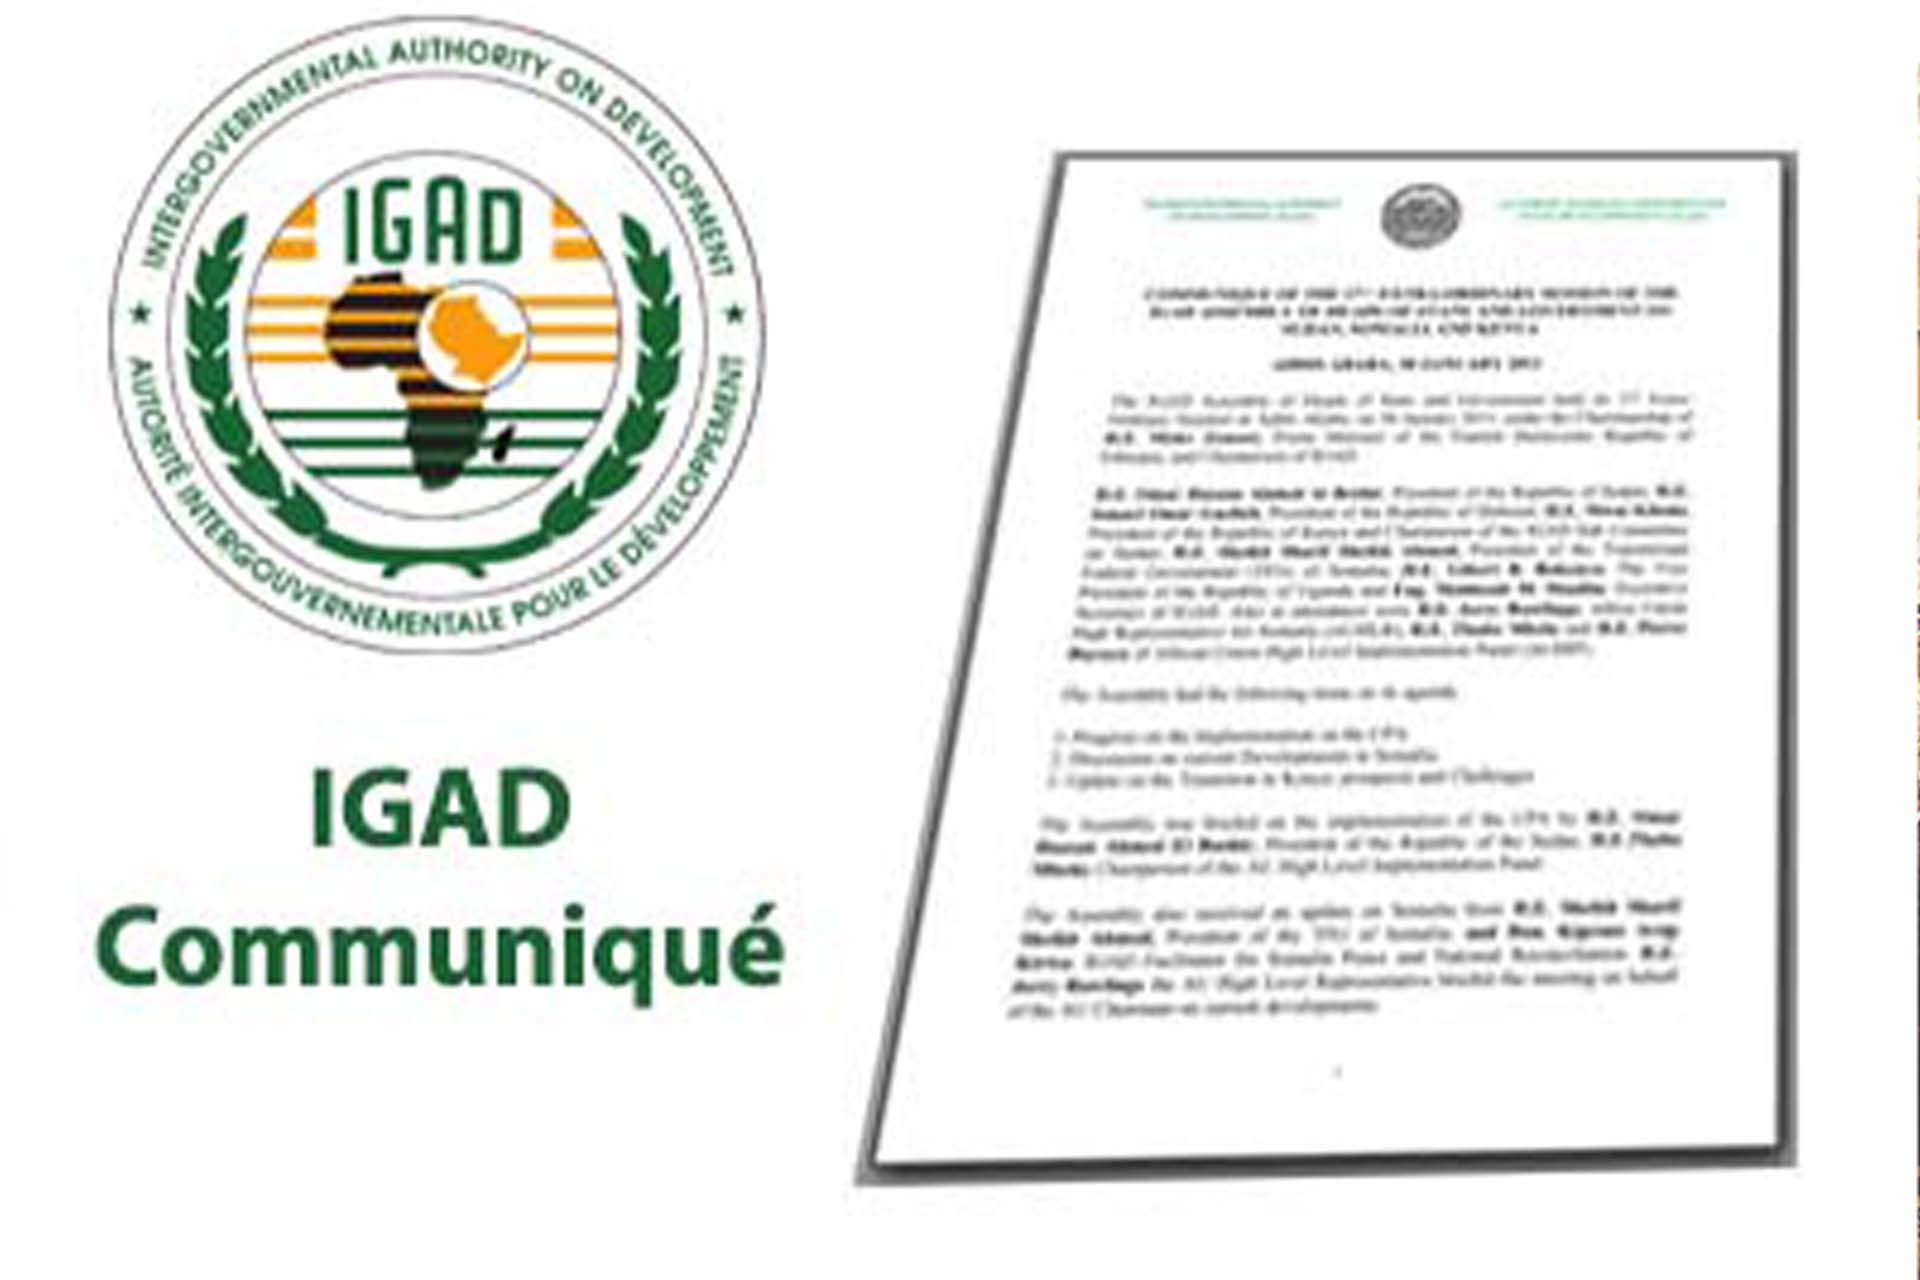 IGAD Summit Declaration On Current High Food Price Crisis